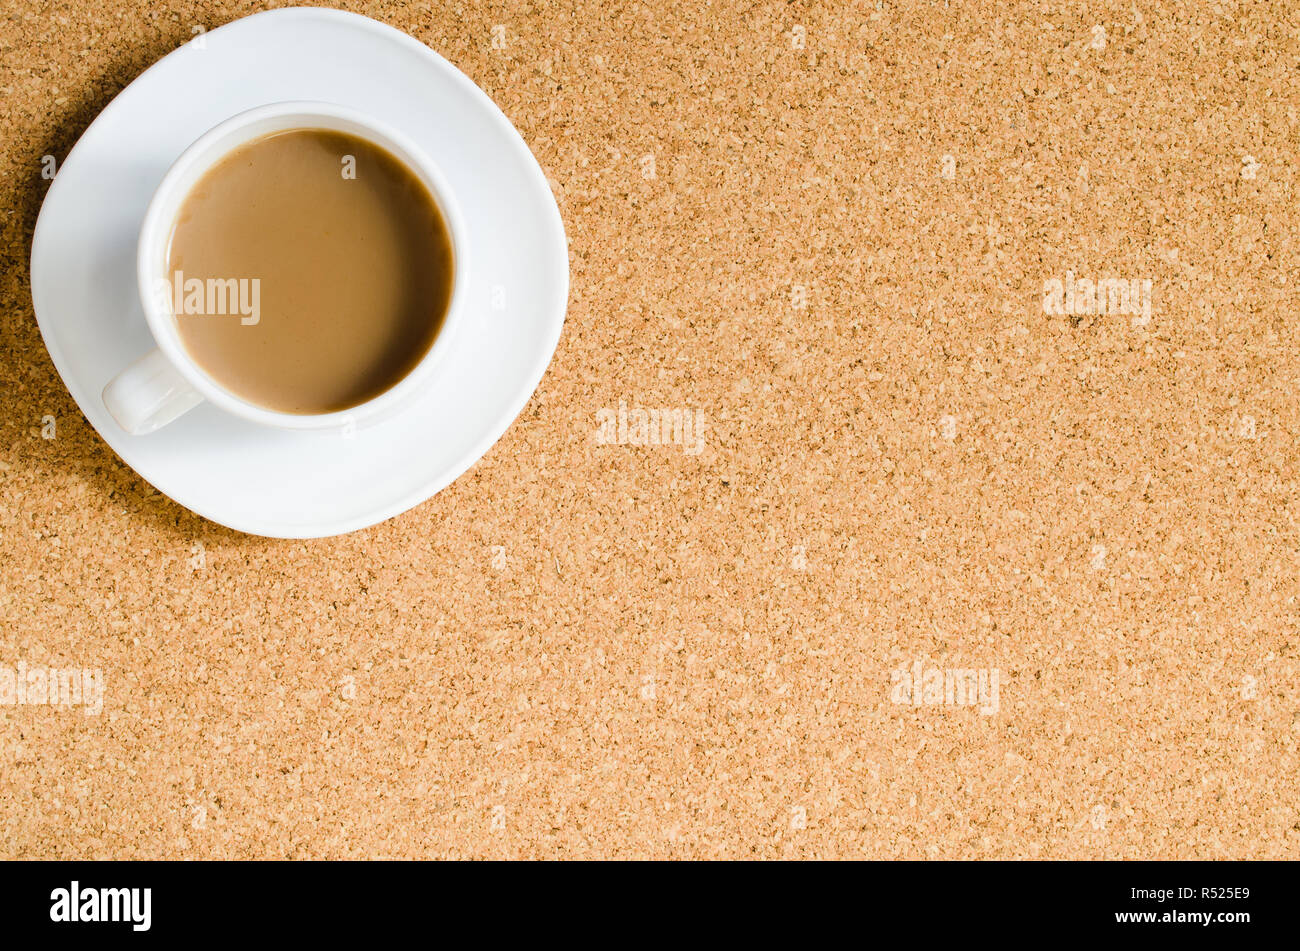 Cup of coffee on cork board. Stock Photo